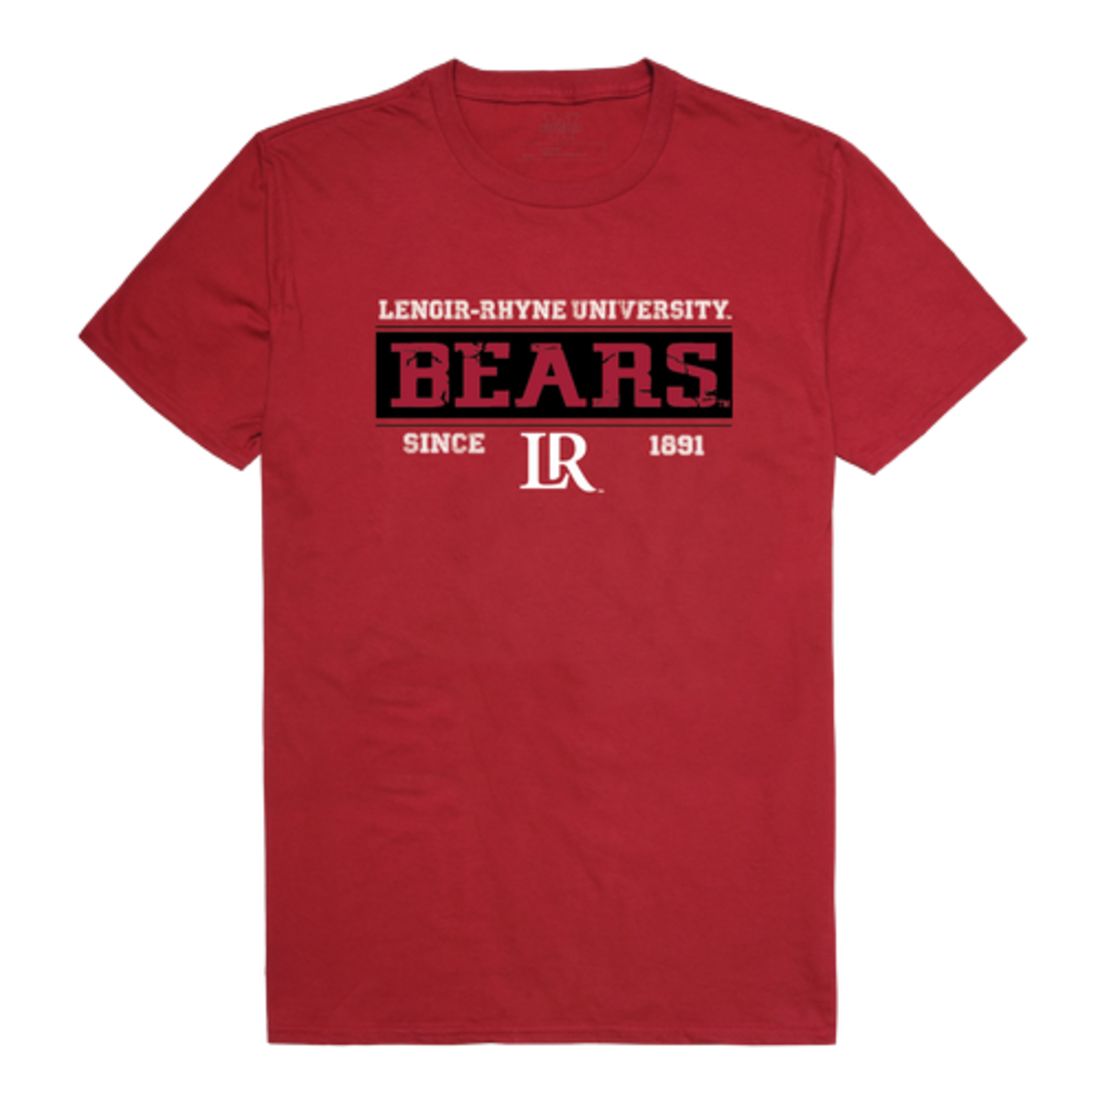 Lenoir-Rhyne University Bears Established T-Shirt Tee